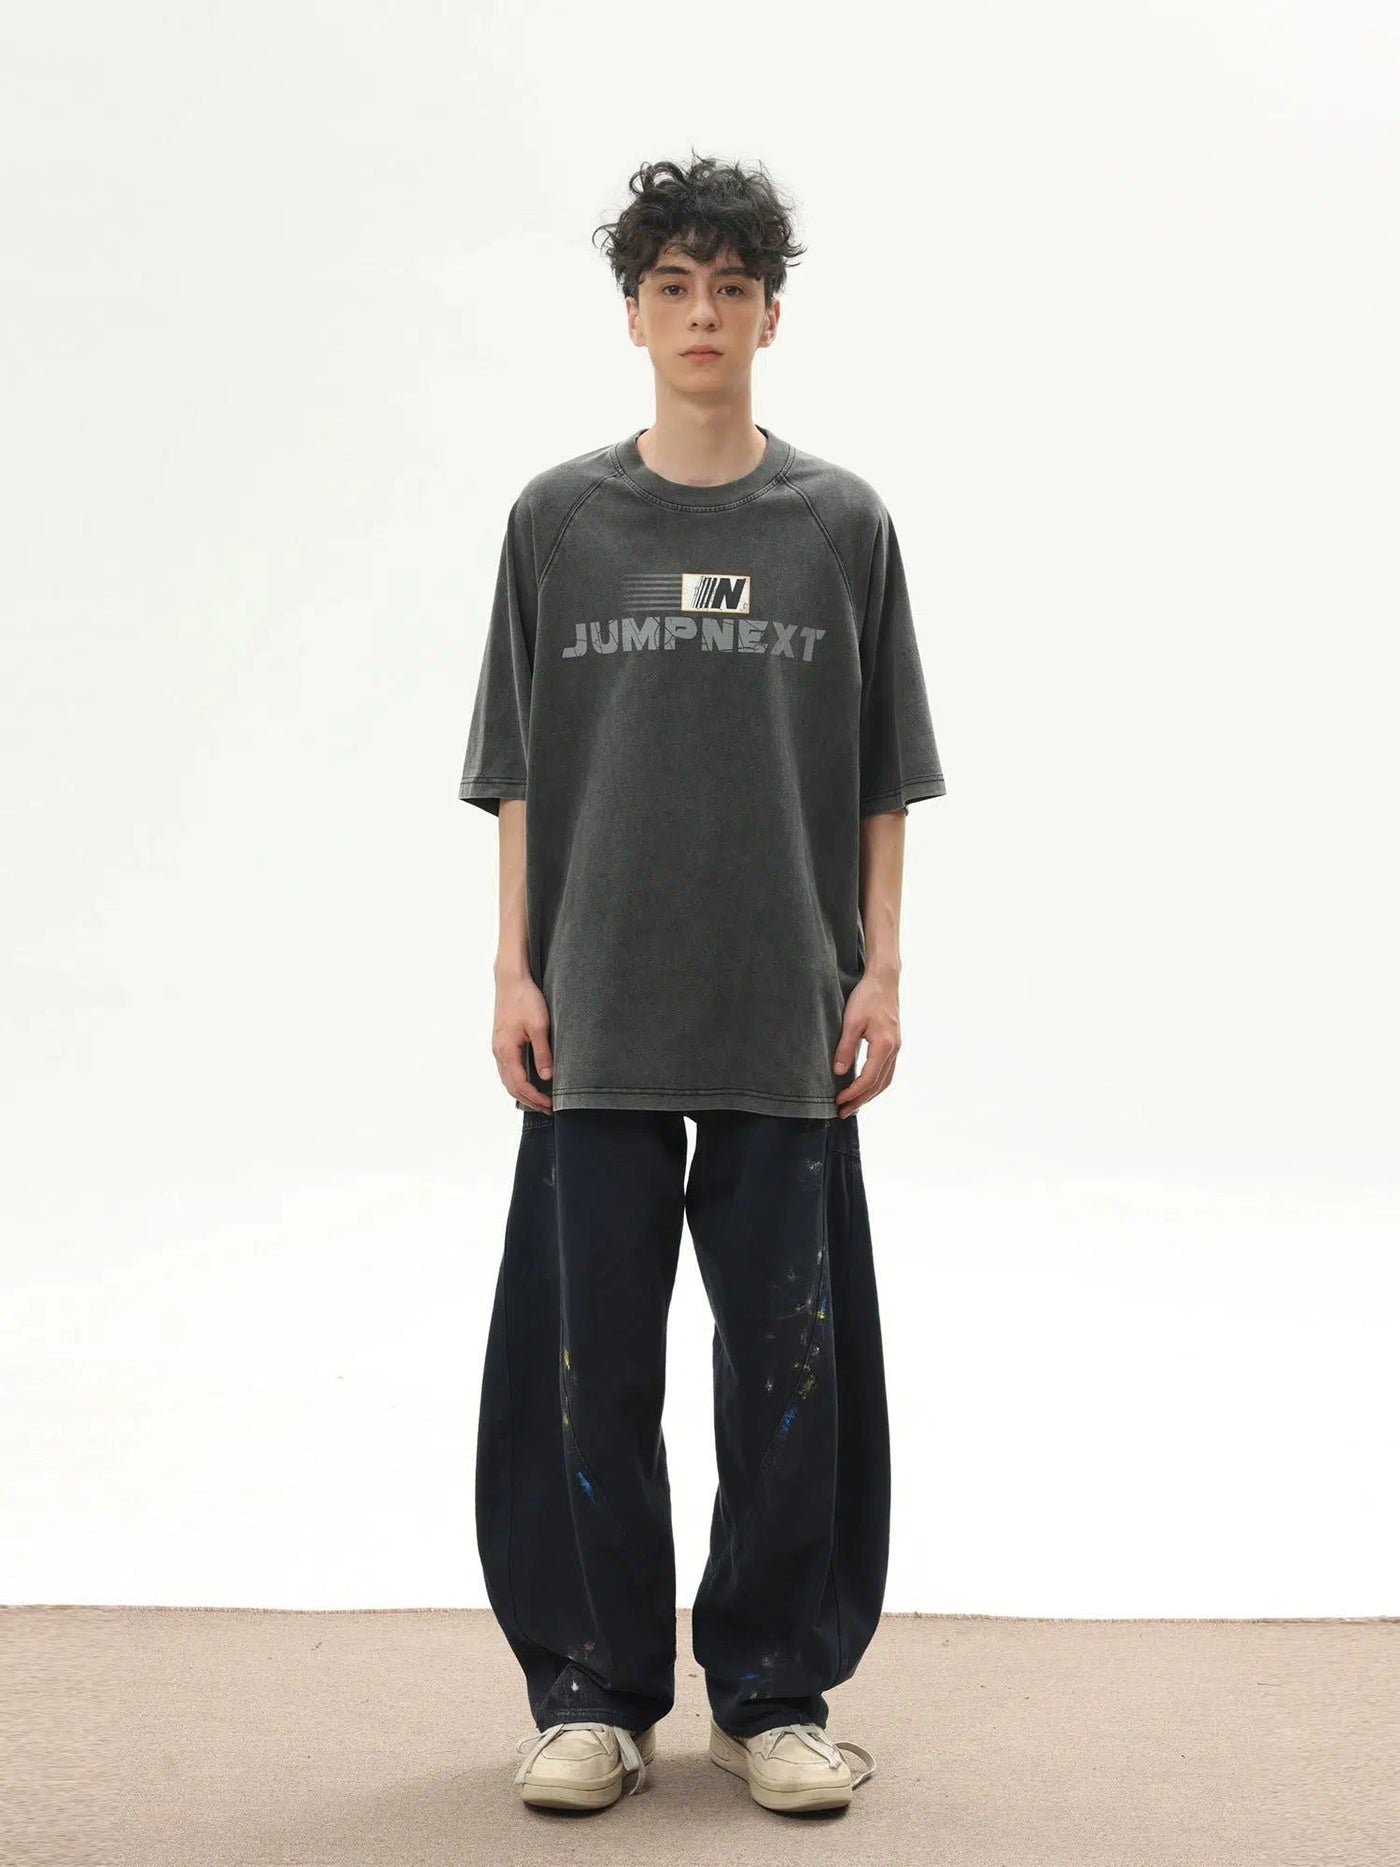 Logo Grunge Overlay T-Shirt Korean Street Fashion T-Shirt By Jump Next Shop Online at OH Vault